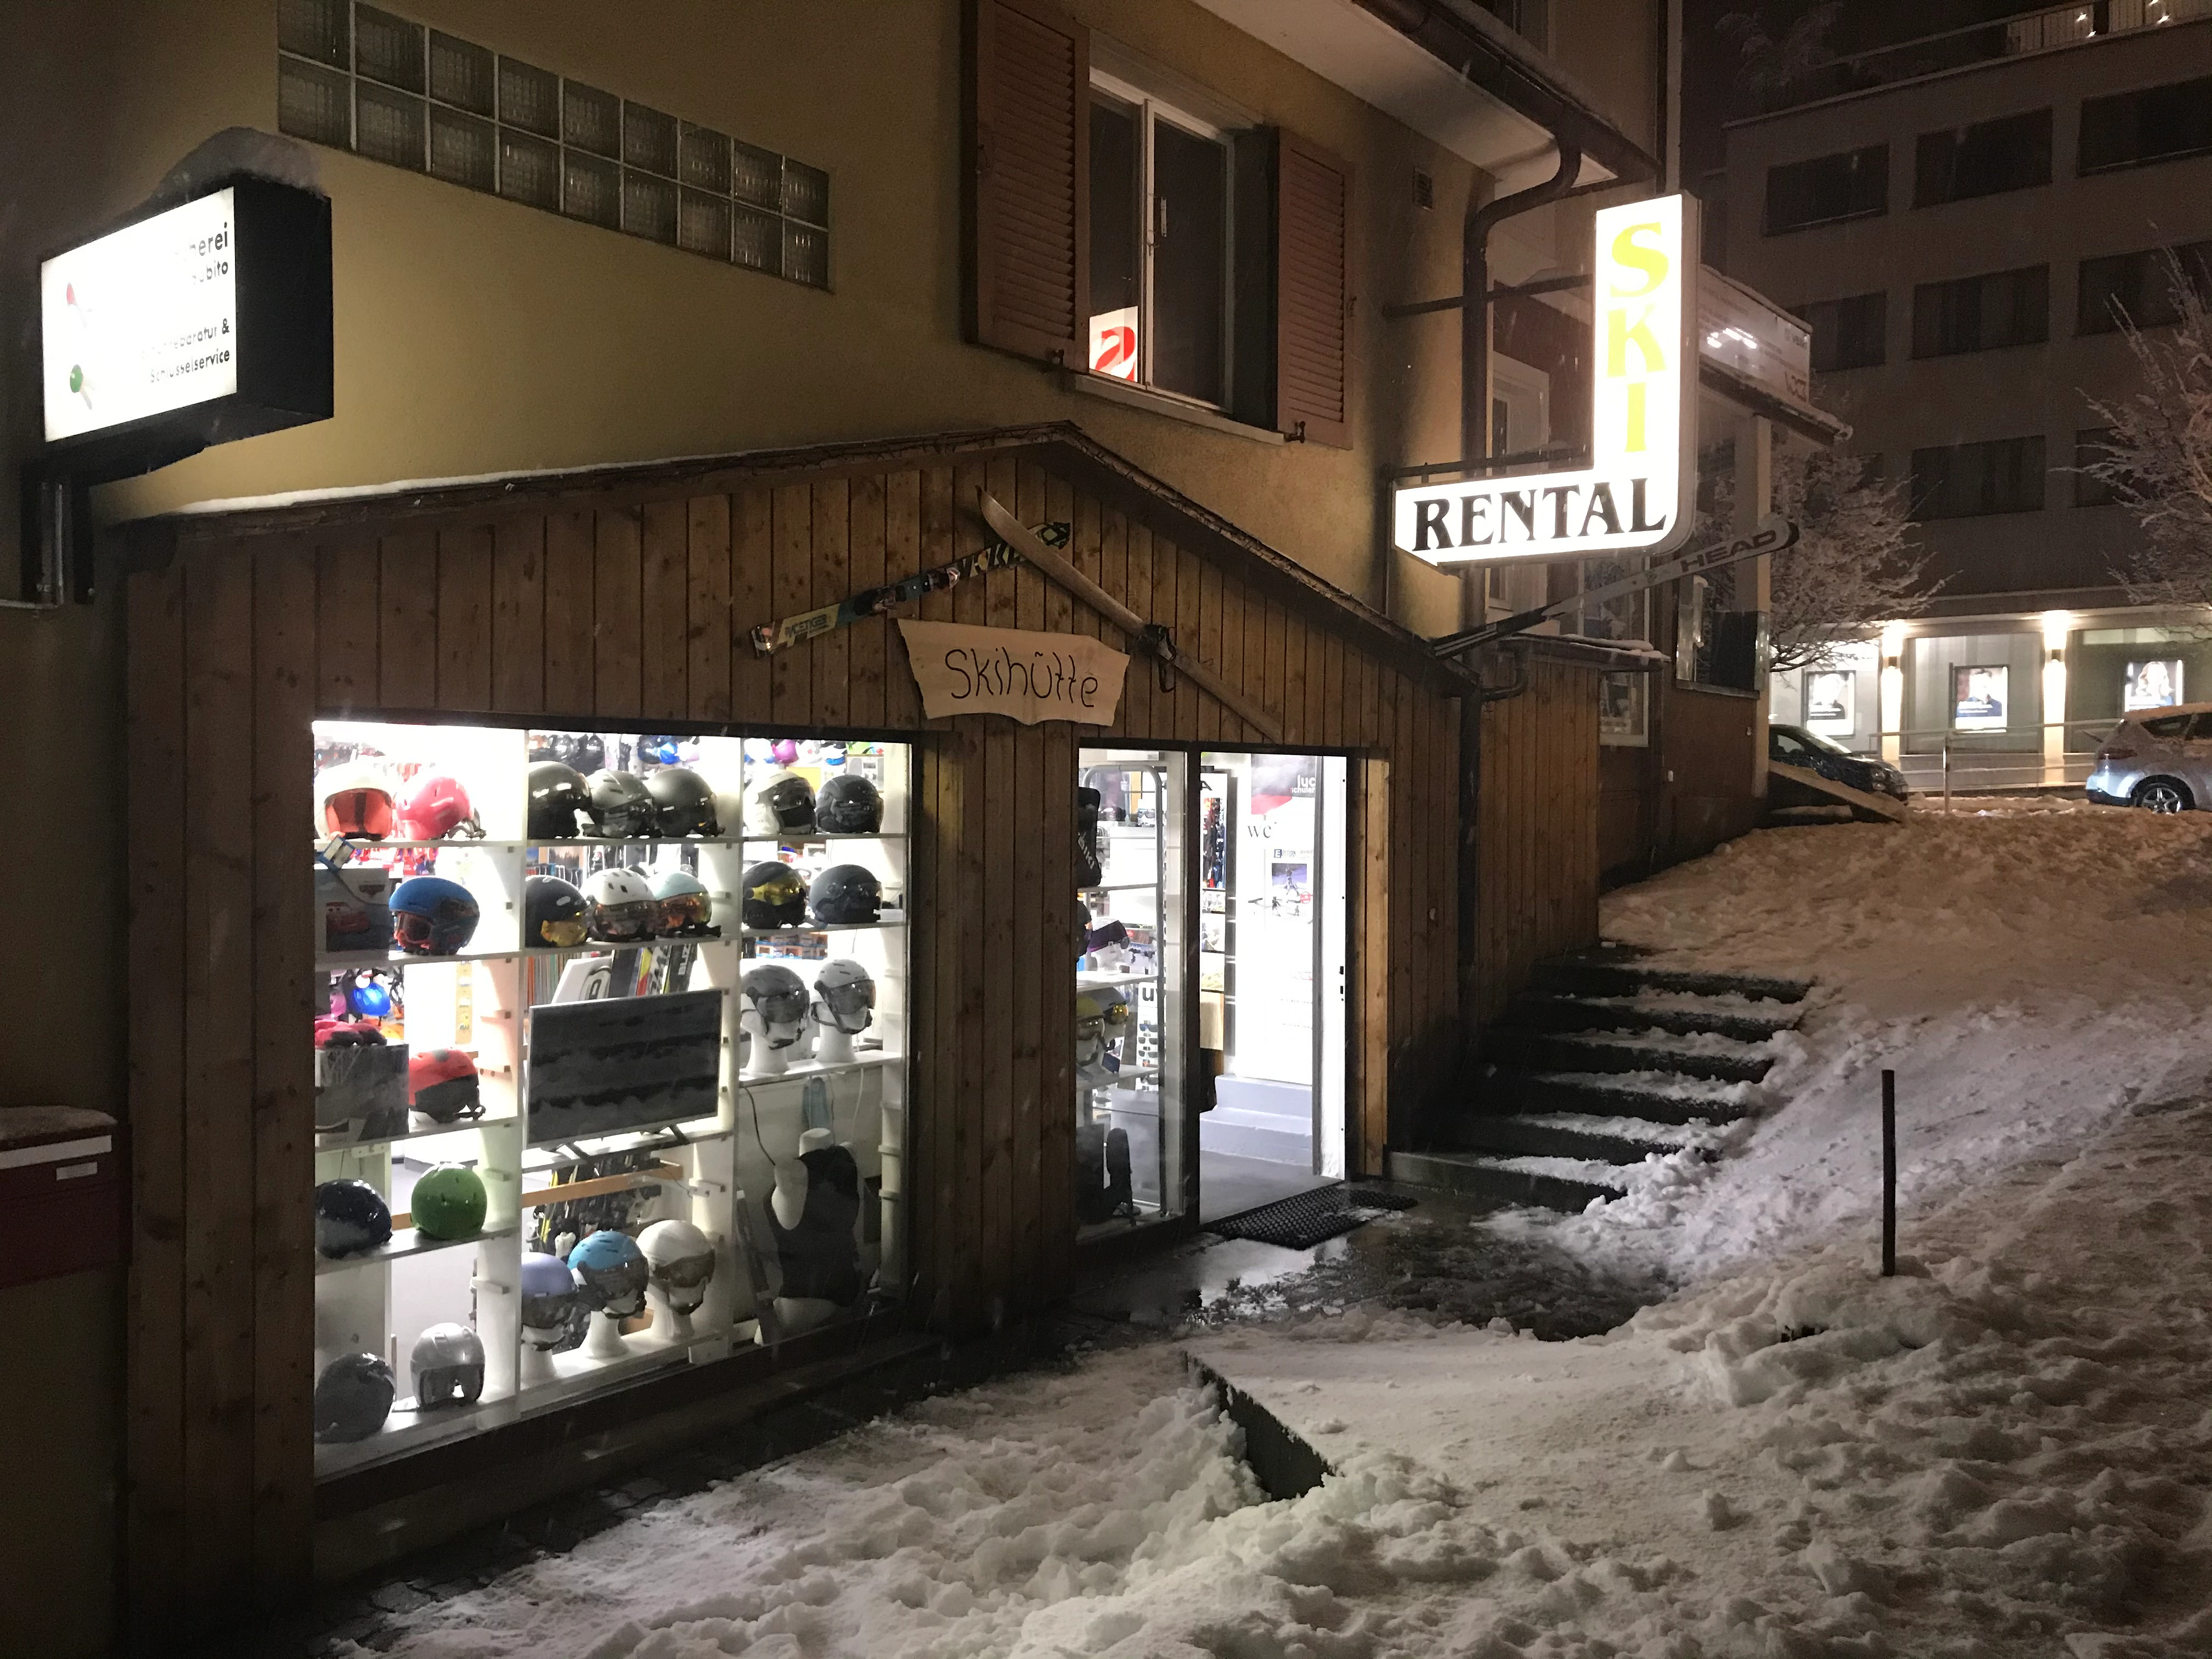 Vock Ski Rental GmbH